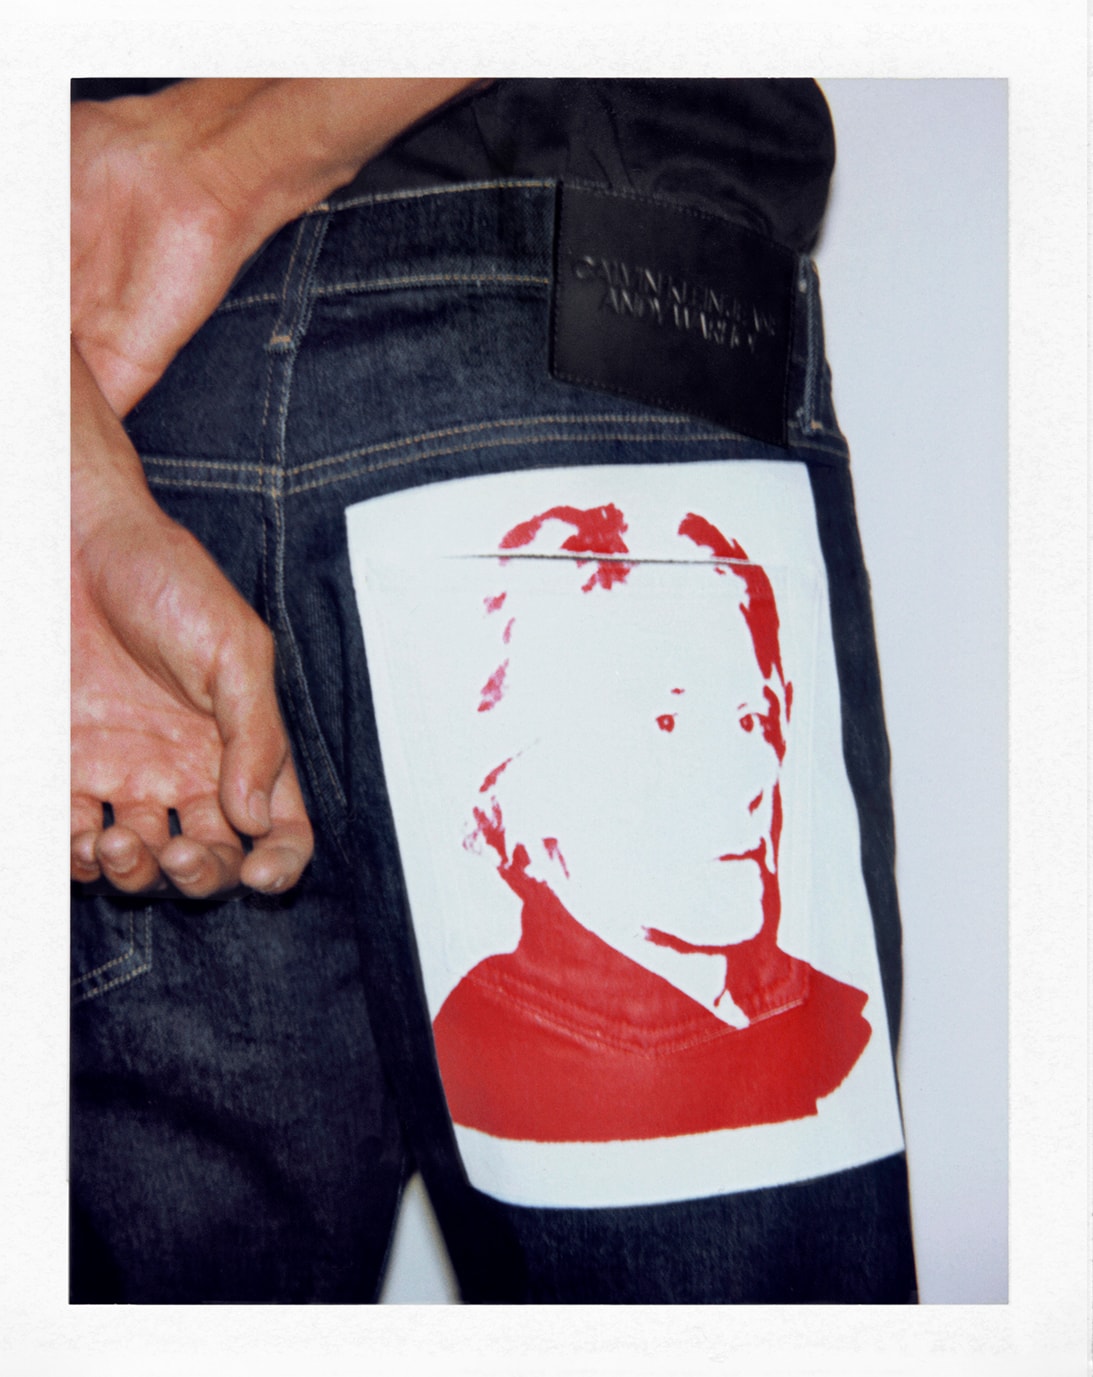 Calvin Klein Jeans Andy Warhol Self Portrait Collection collaboration release date info drop denim print pop art foundation june 7 2018 web store